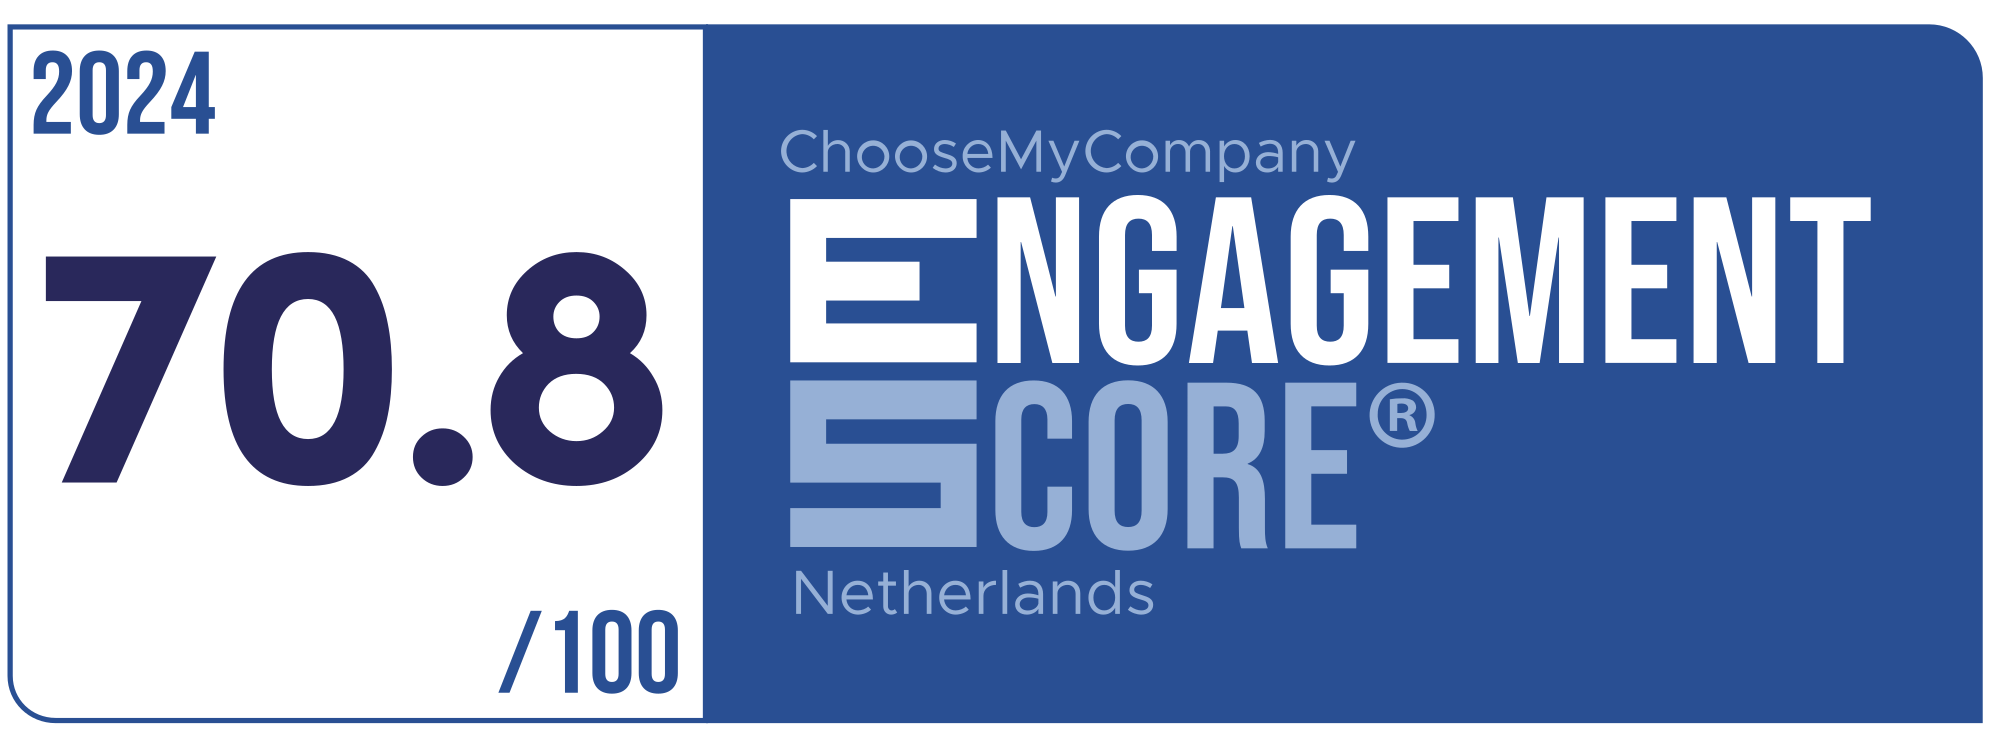 Label Engagement Score 2024 Netherlands